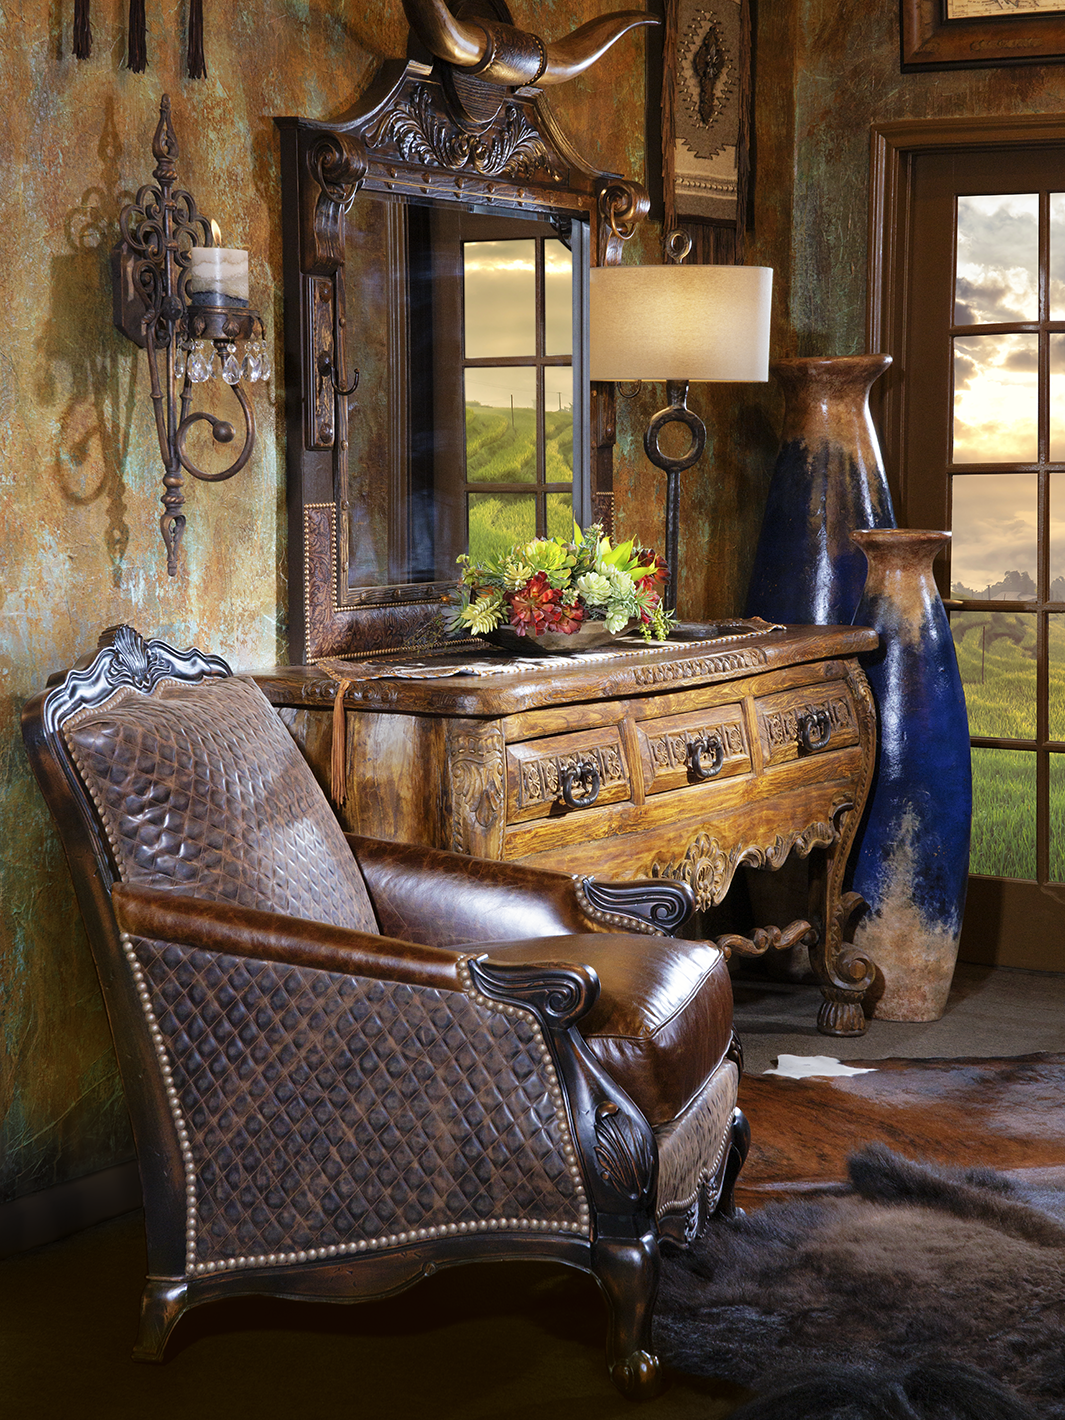 Downtown Cowboy Leather Sofa – Runyon's Fine Furniture